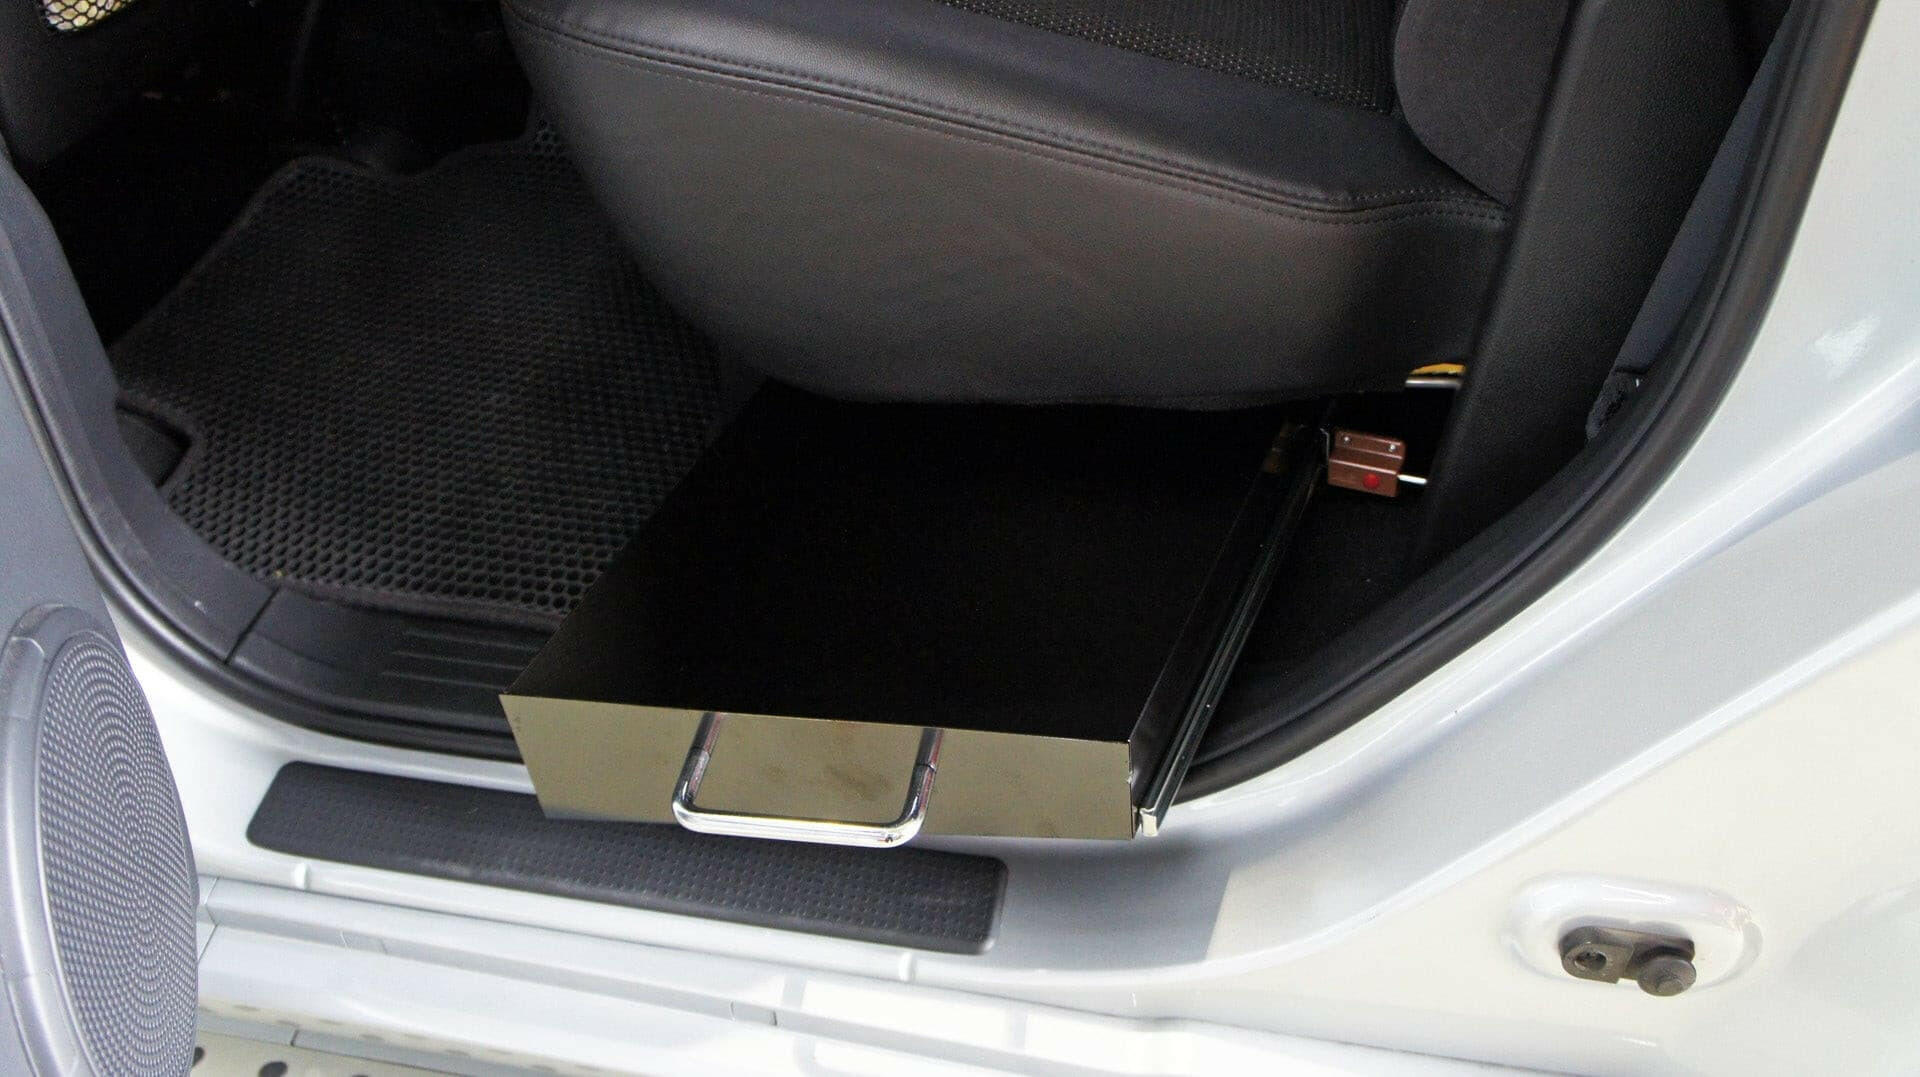 Jintec Rear Under Seat Slide Out Storage Boxes (Pair).